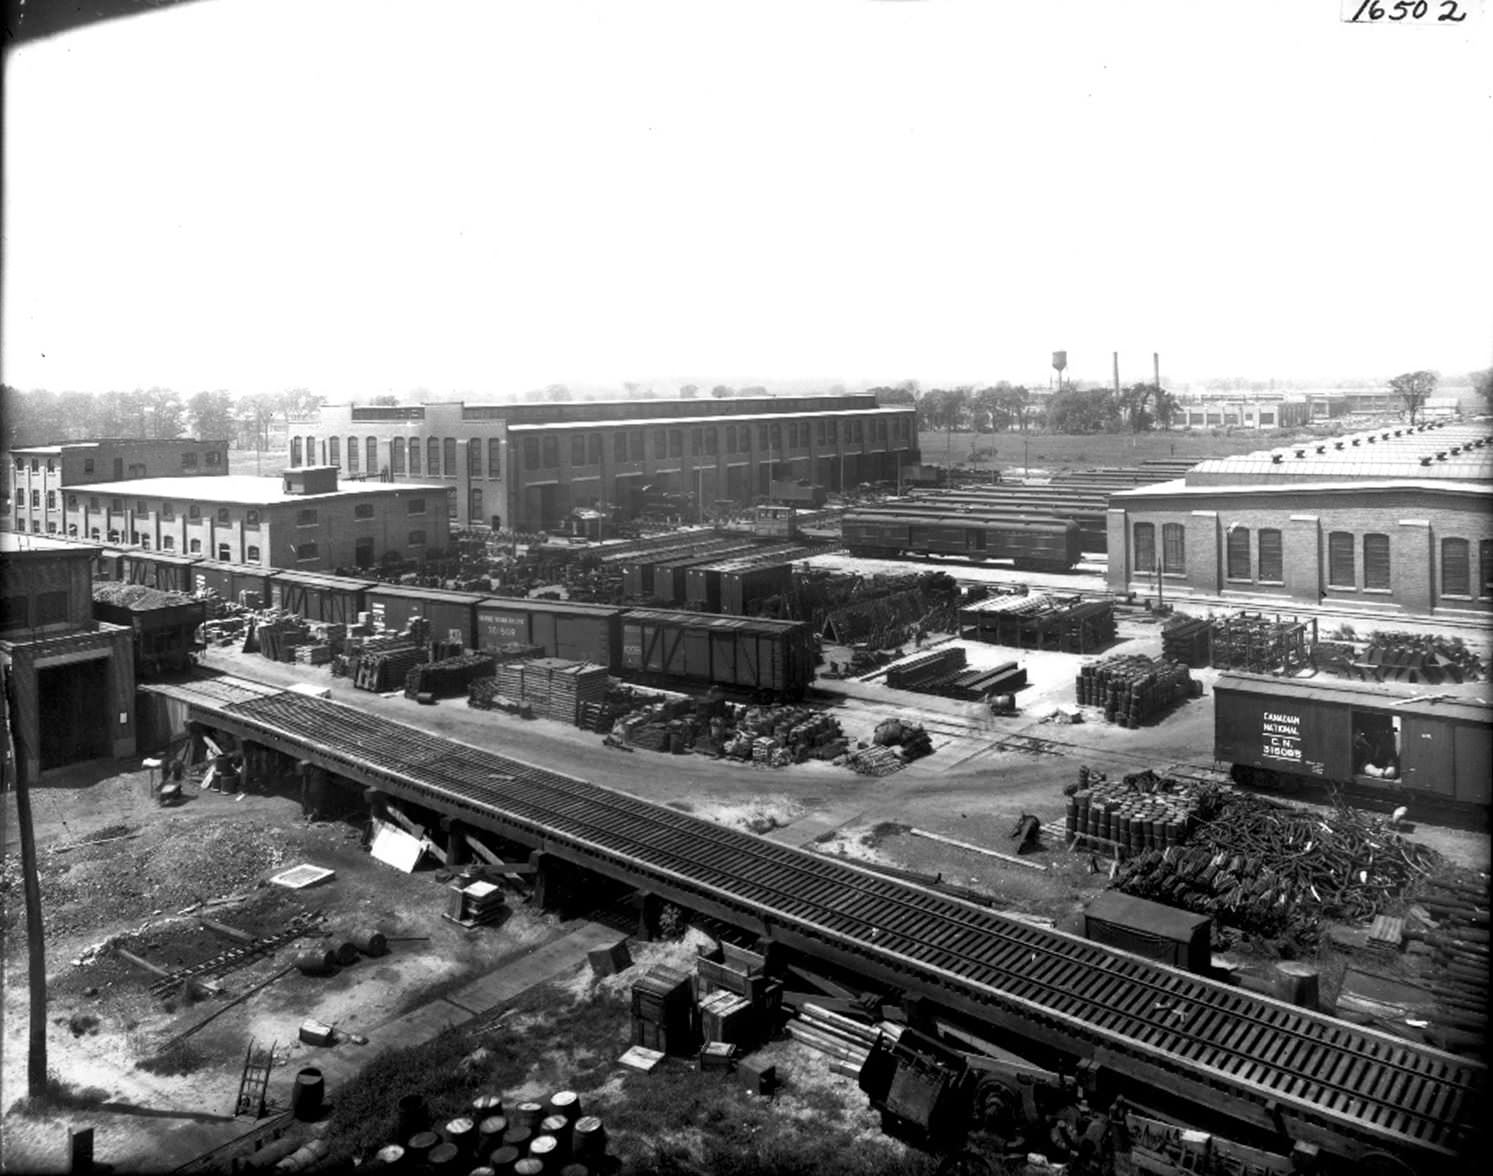 C.N.R. shops at Leaside, view looking northwest, 1920